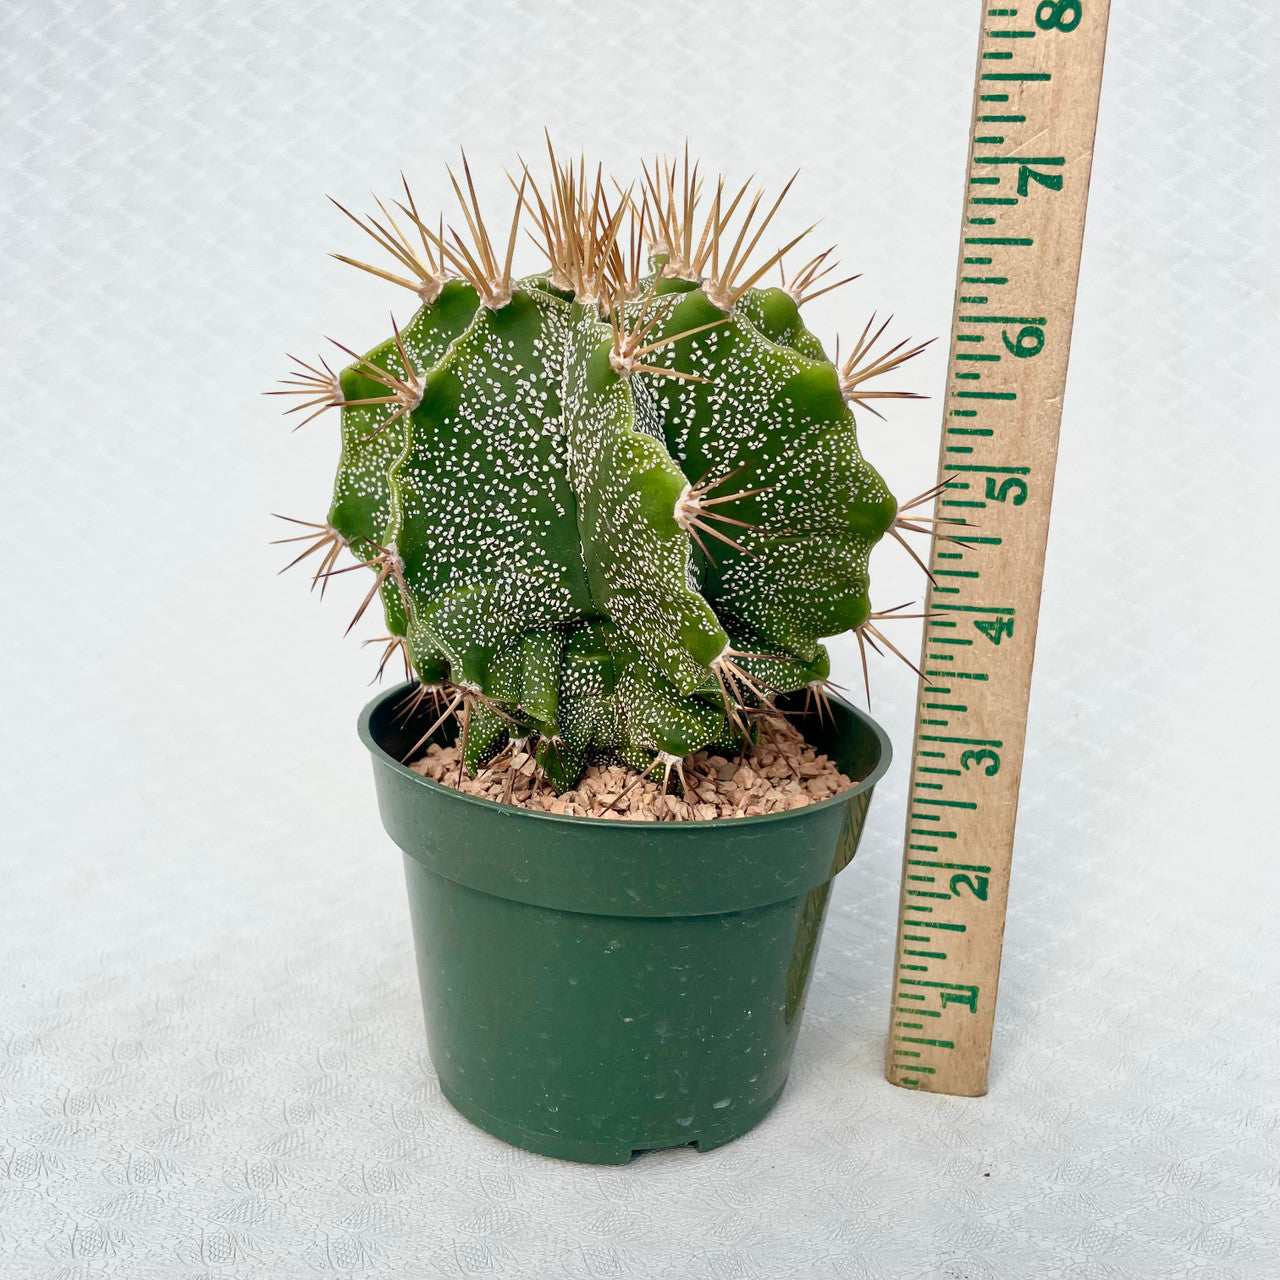 4 in. Astrophytum - Ornatum v. Mirbelii next to a measuring stick